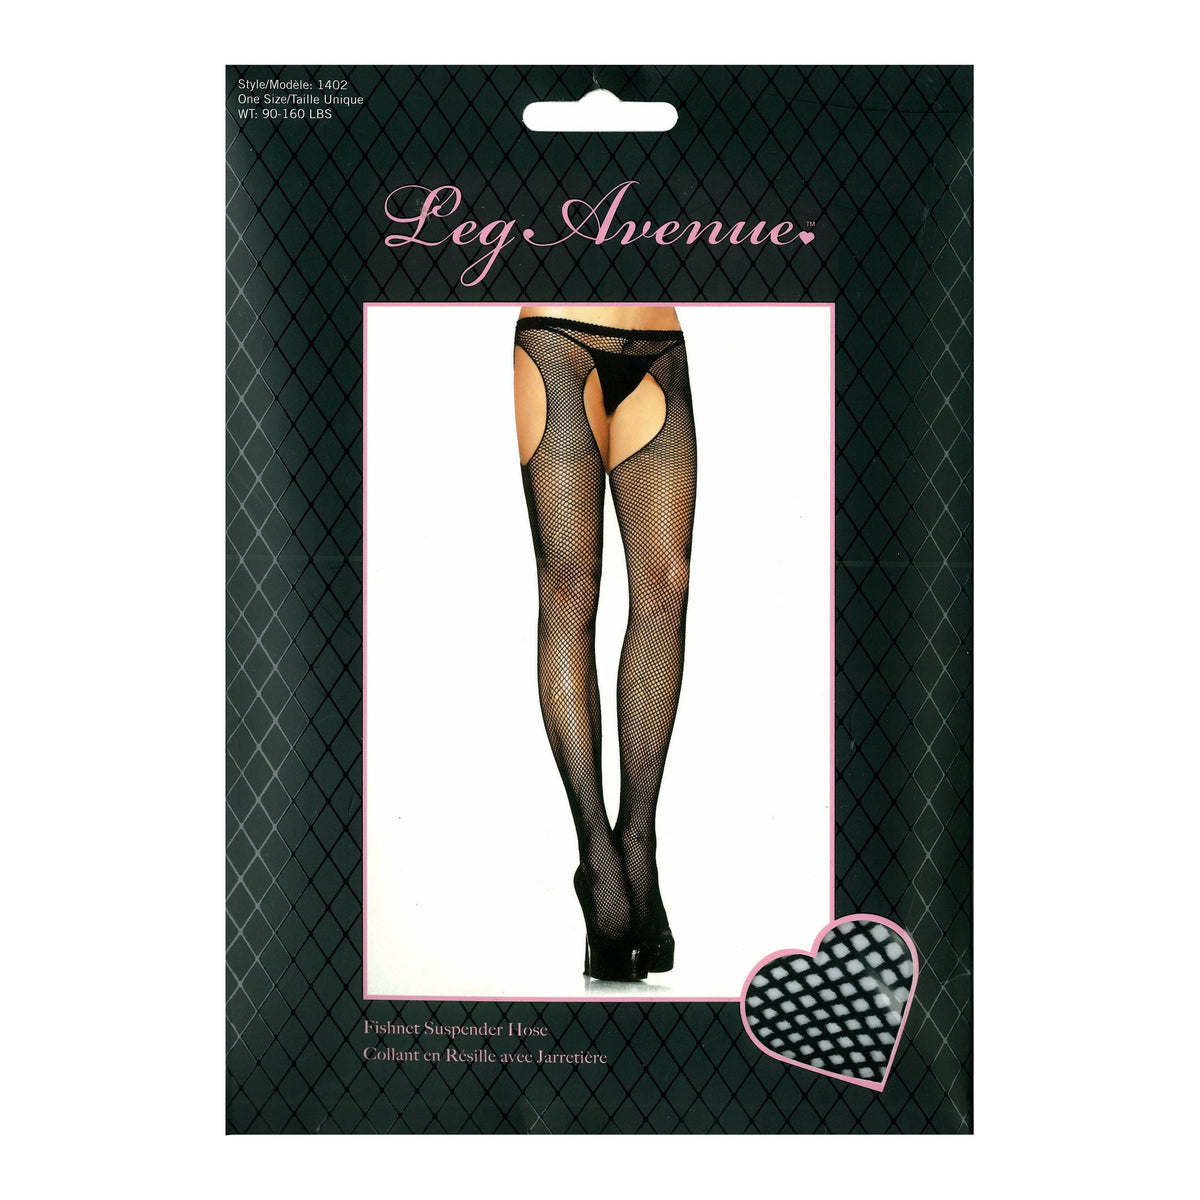 Leg Avenue Fishnet Suspender Hose - Black - One Size